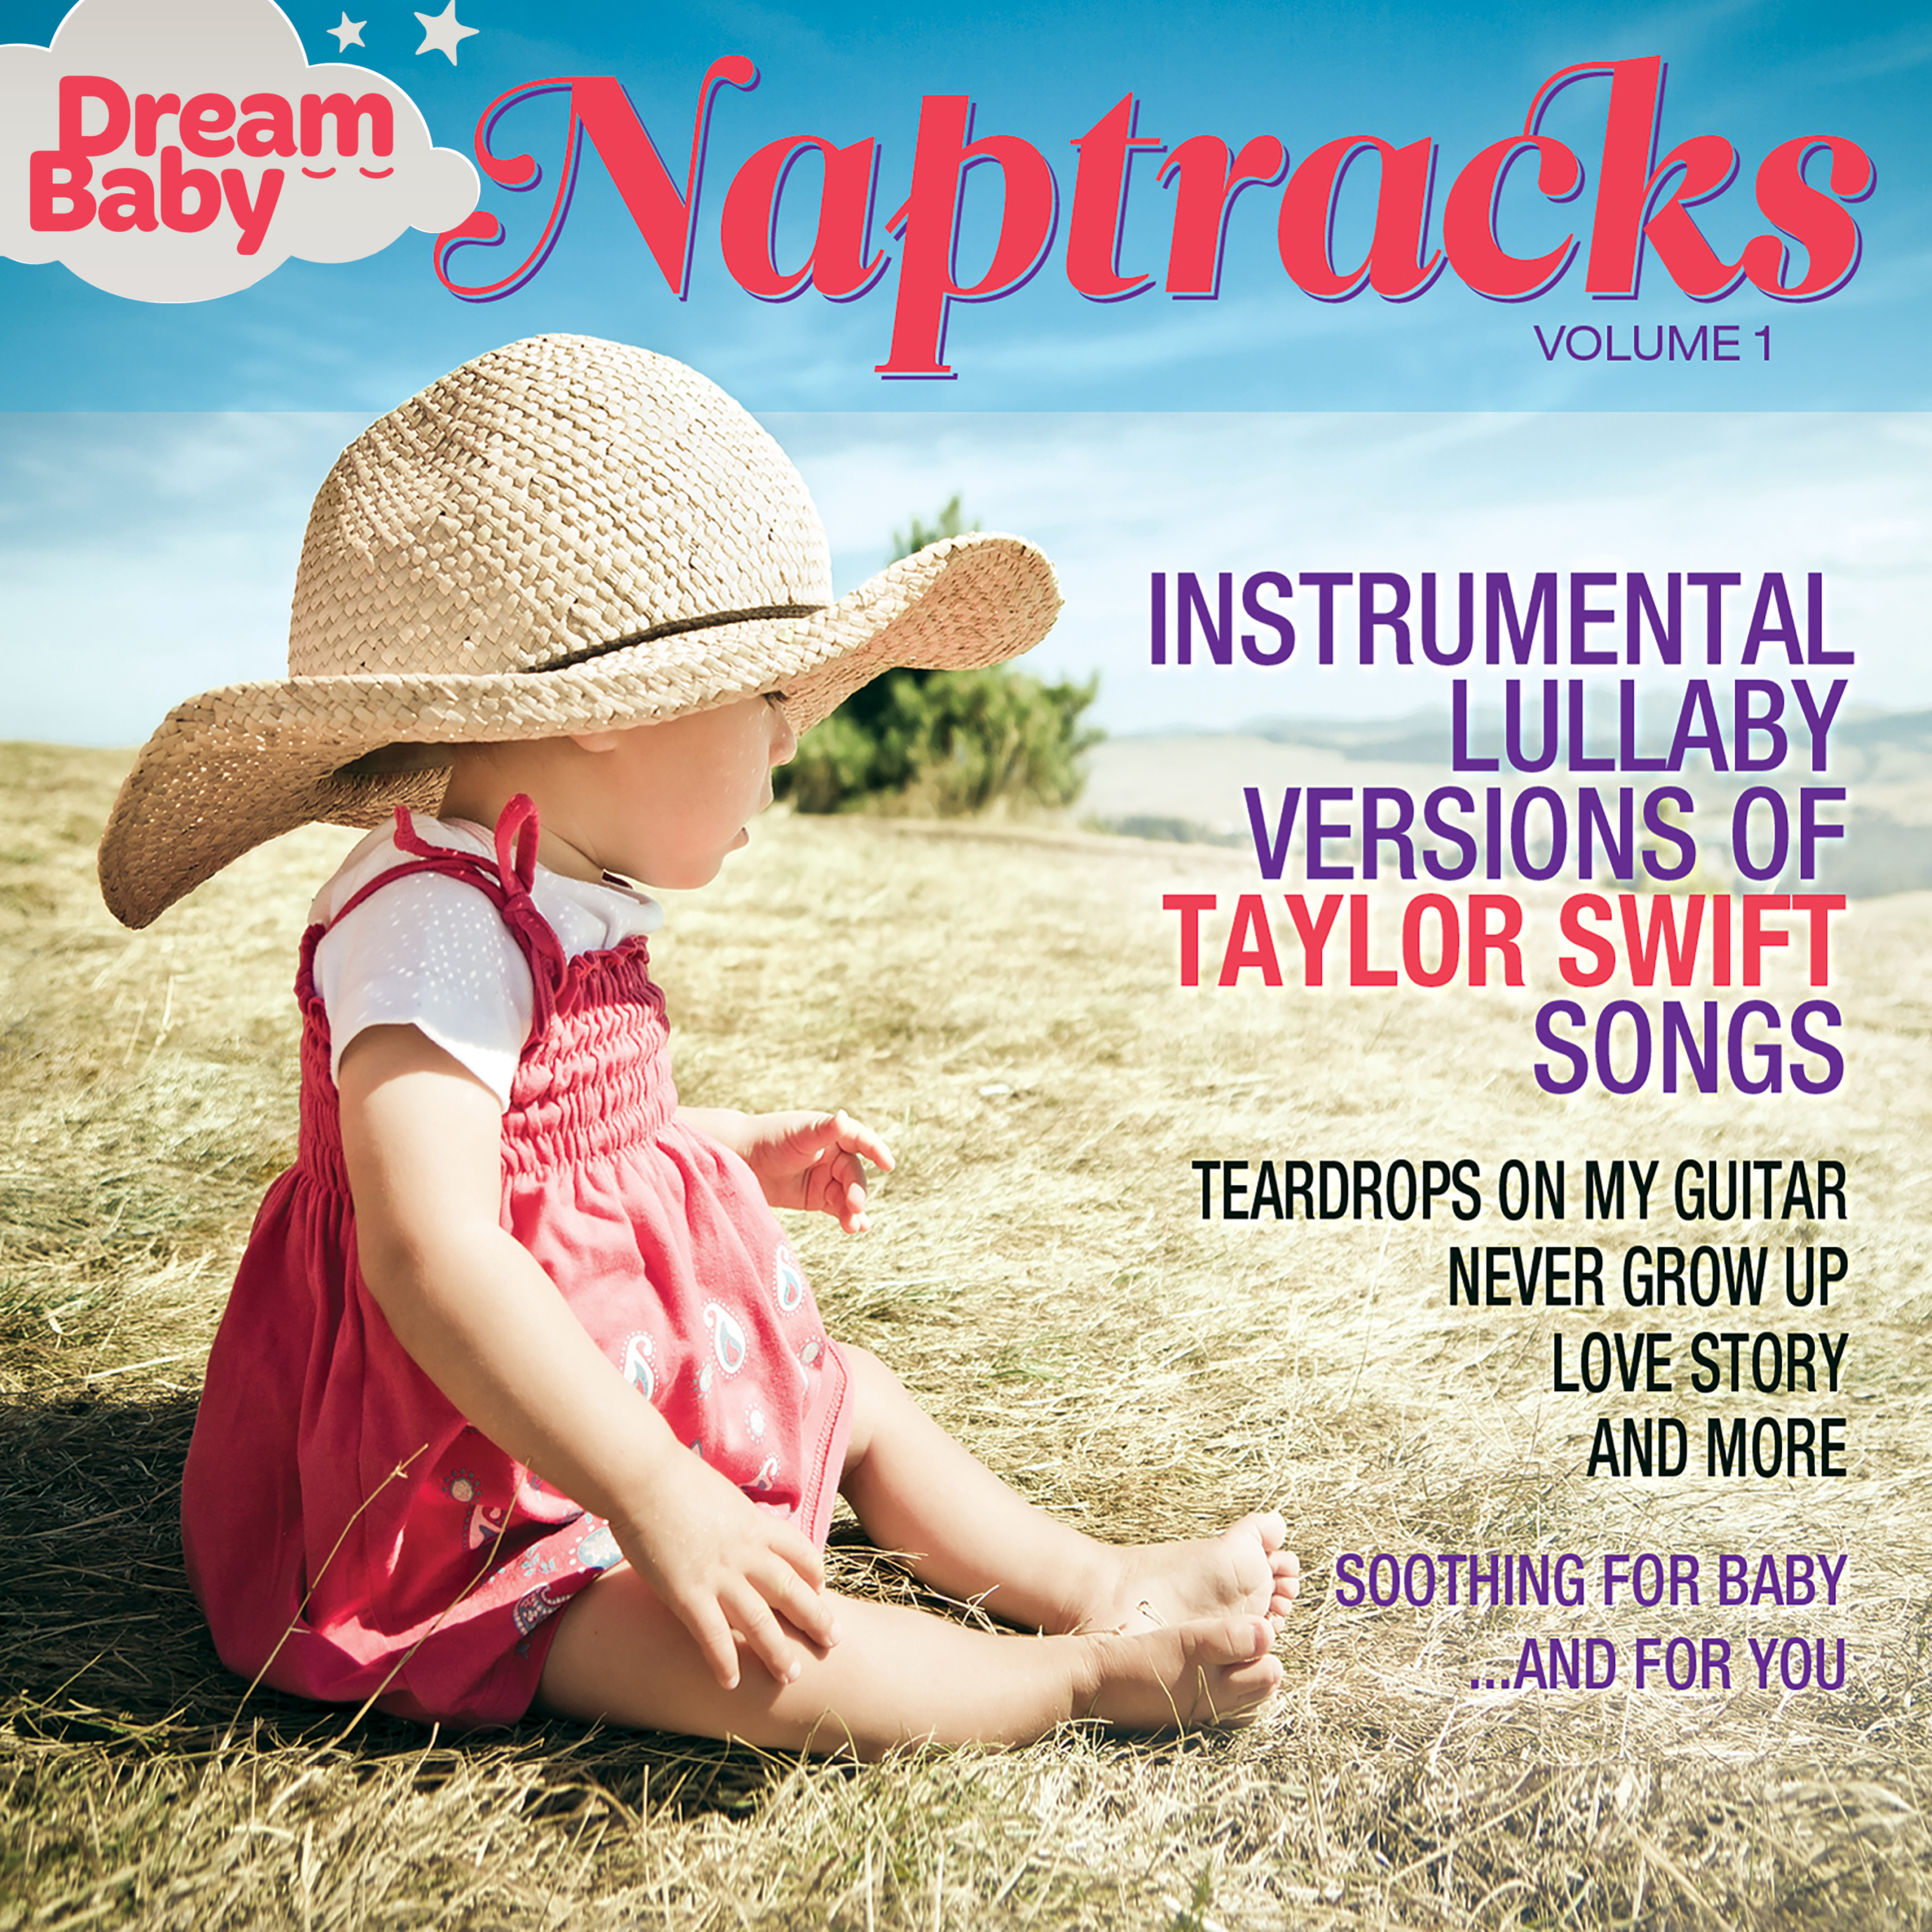 Naptracks Vol. 1: Instrumental Lullaby Versions of Taylor Swift